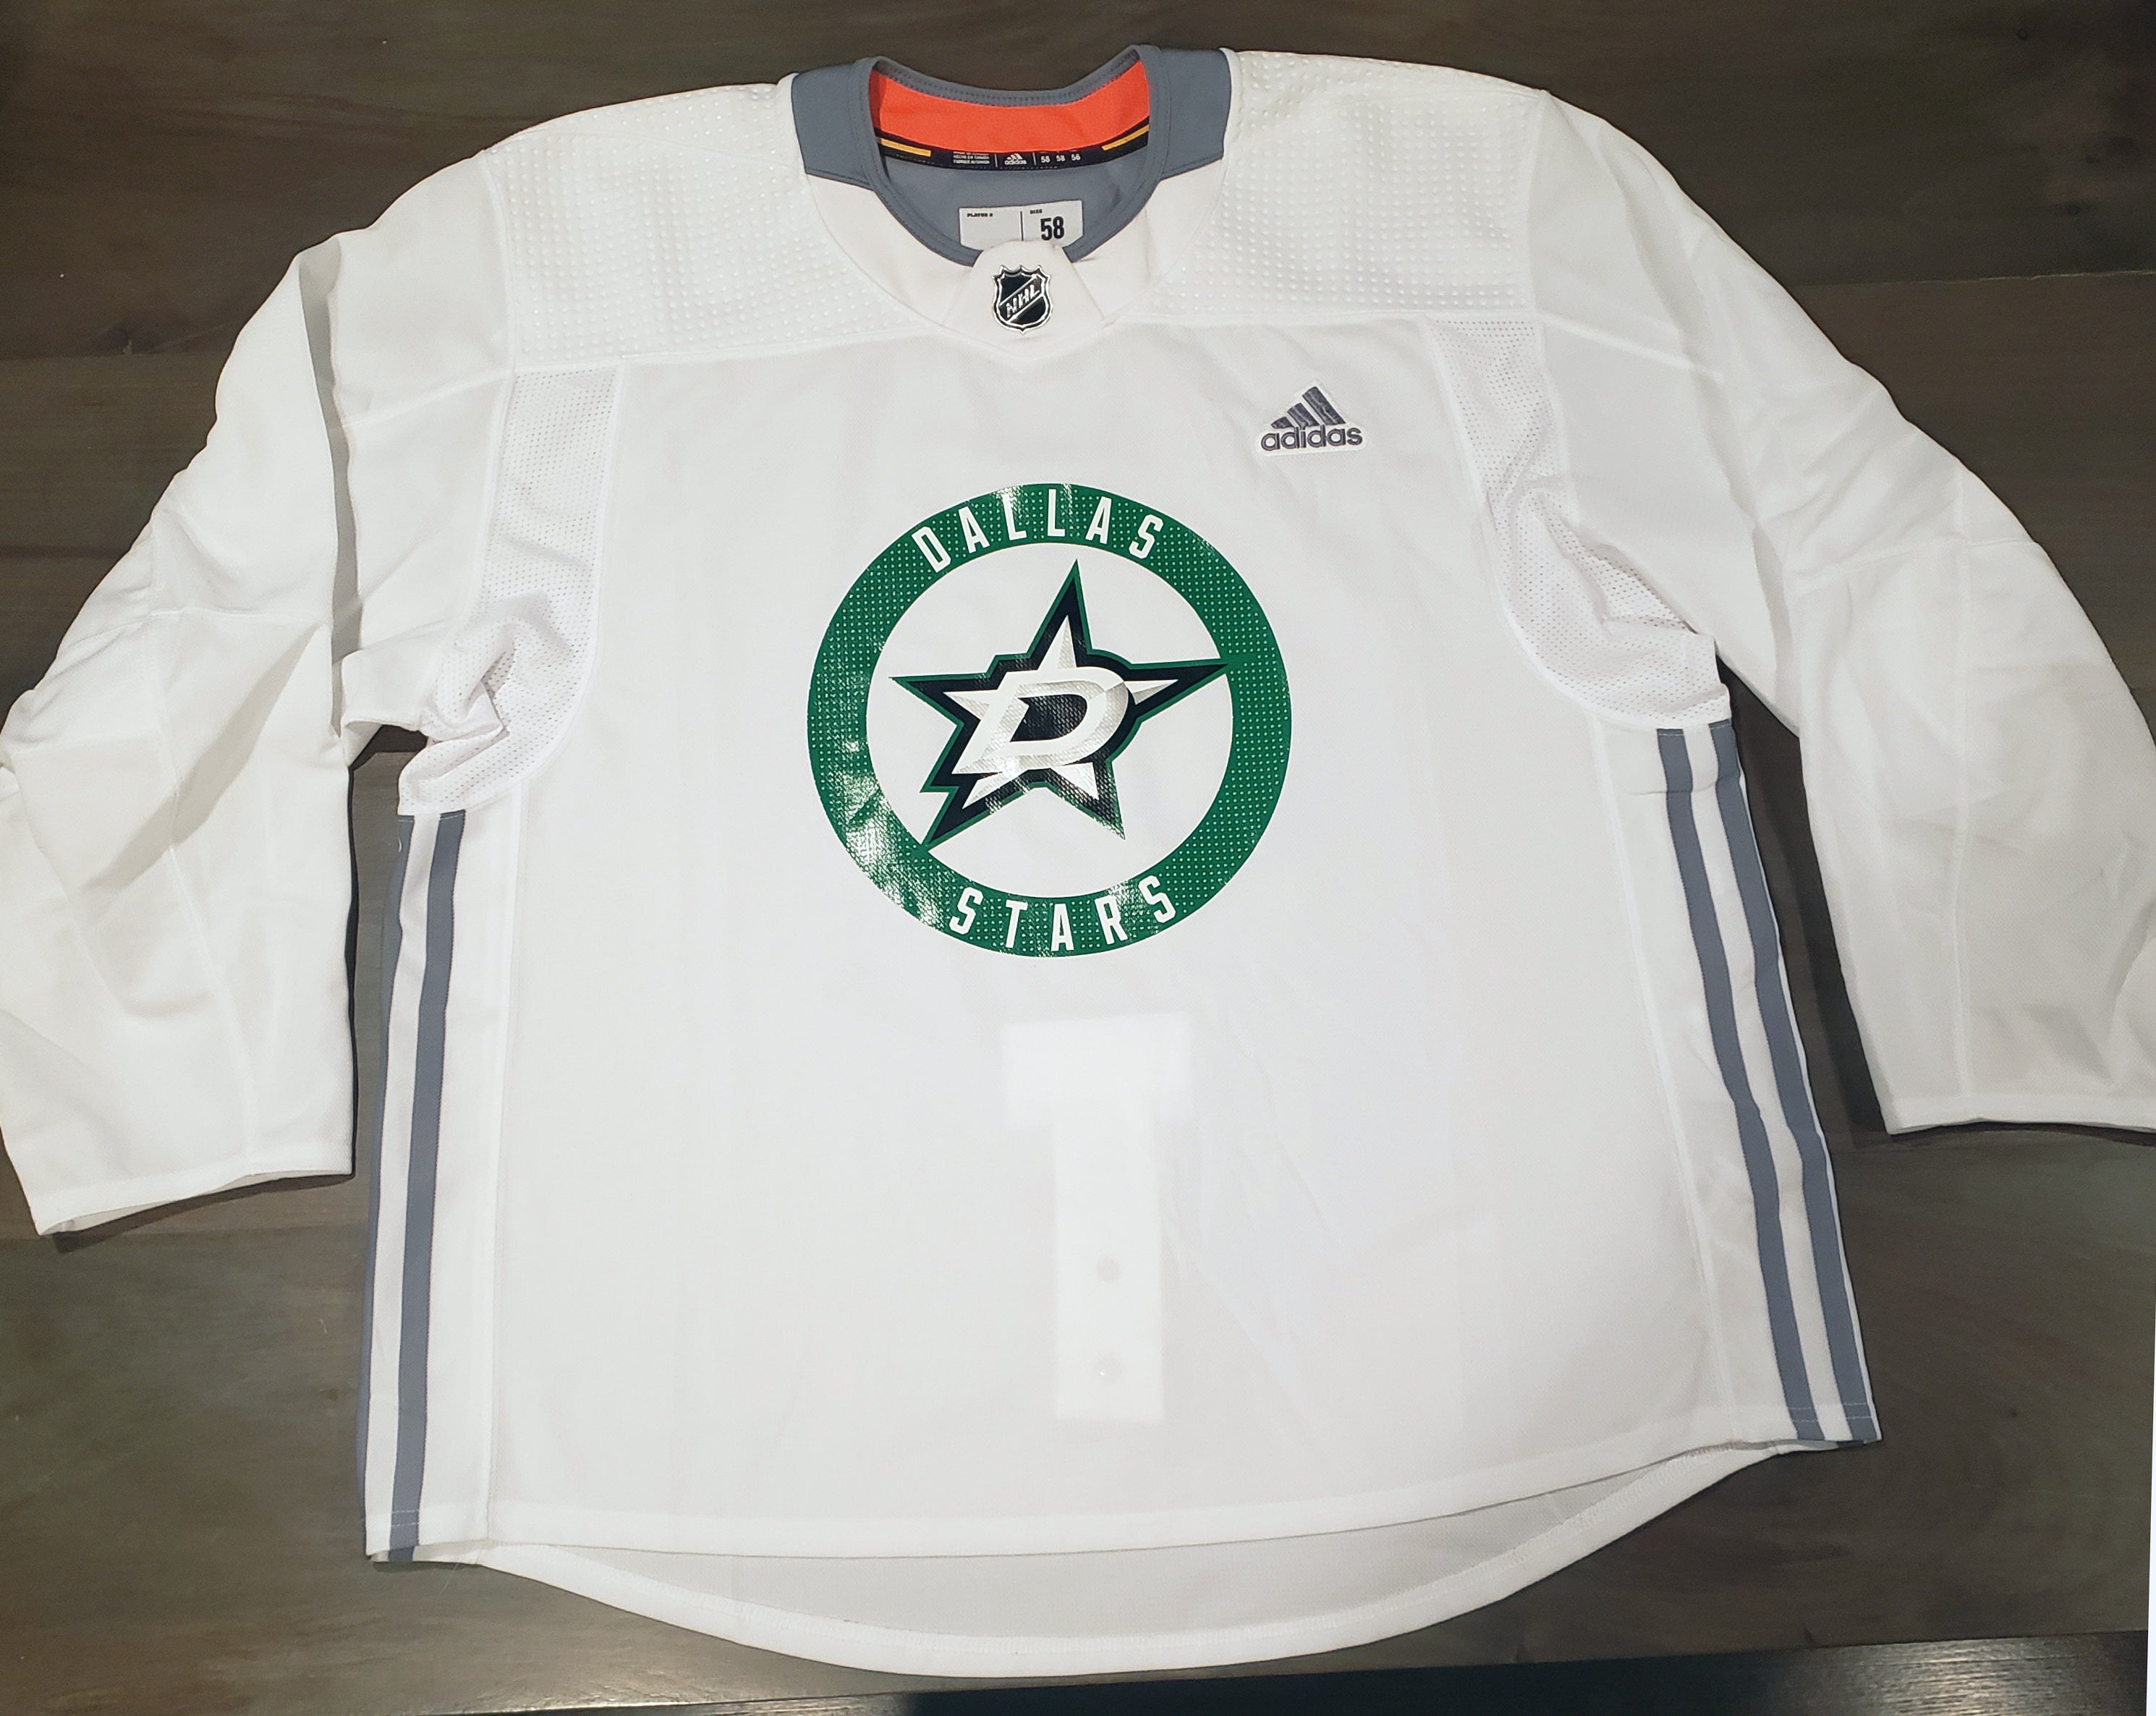 Dallas Stars Adidas MIC Pro Stock Hockey Practice Jersey Size 56